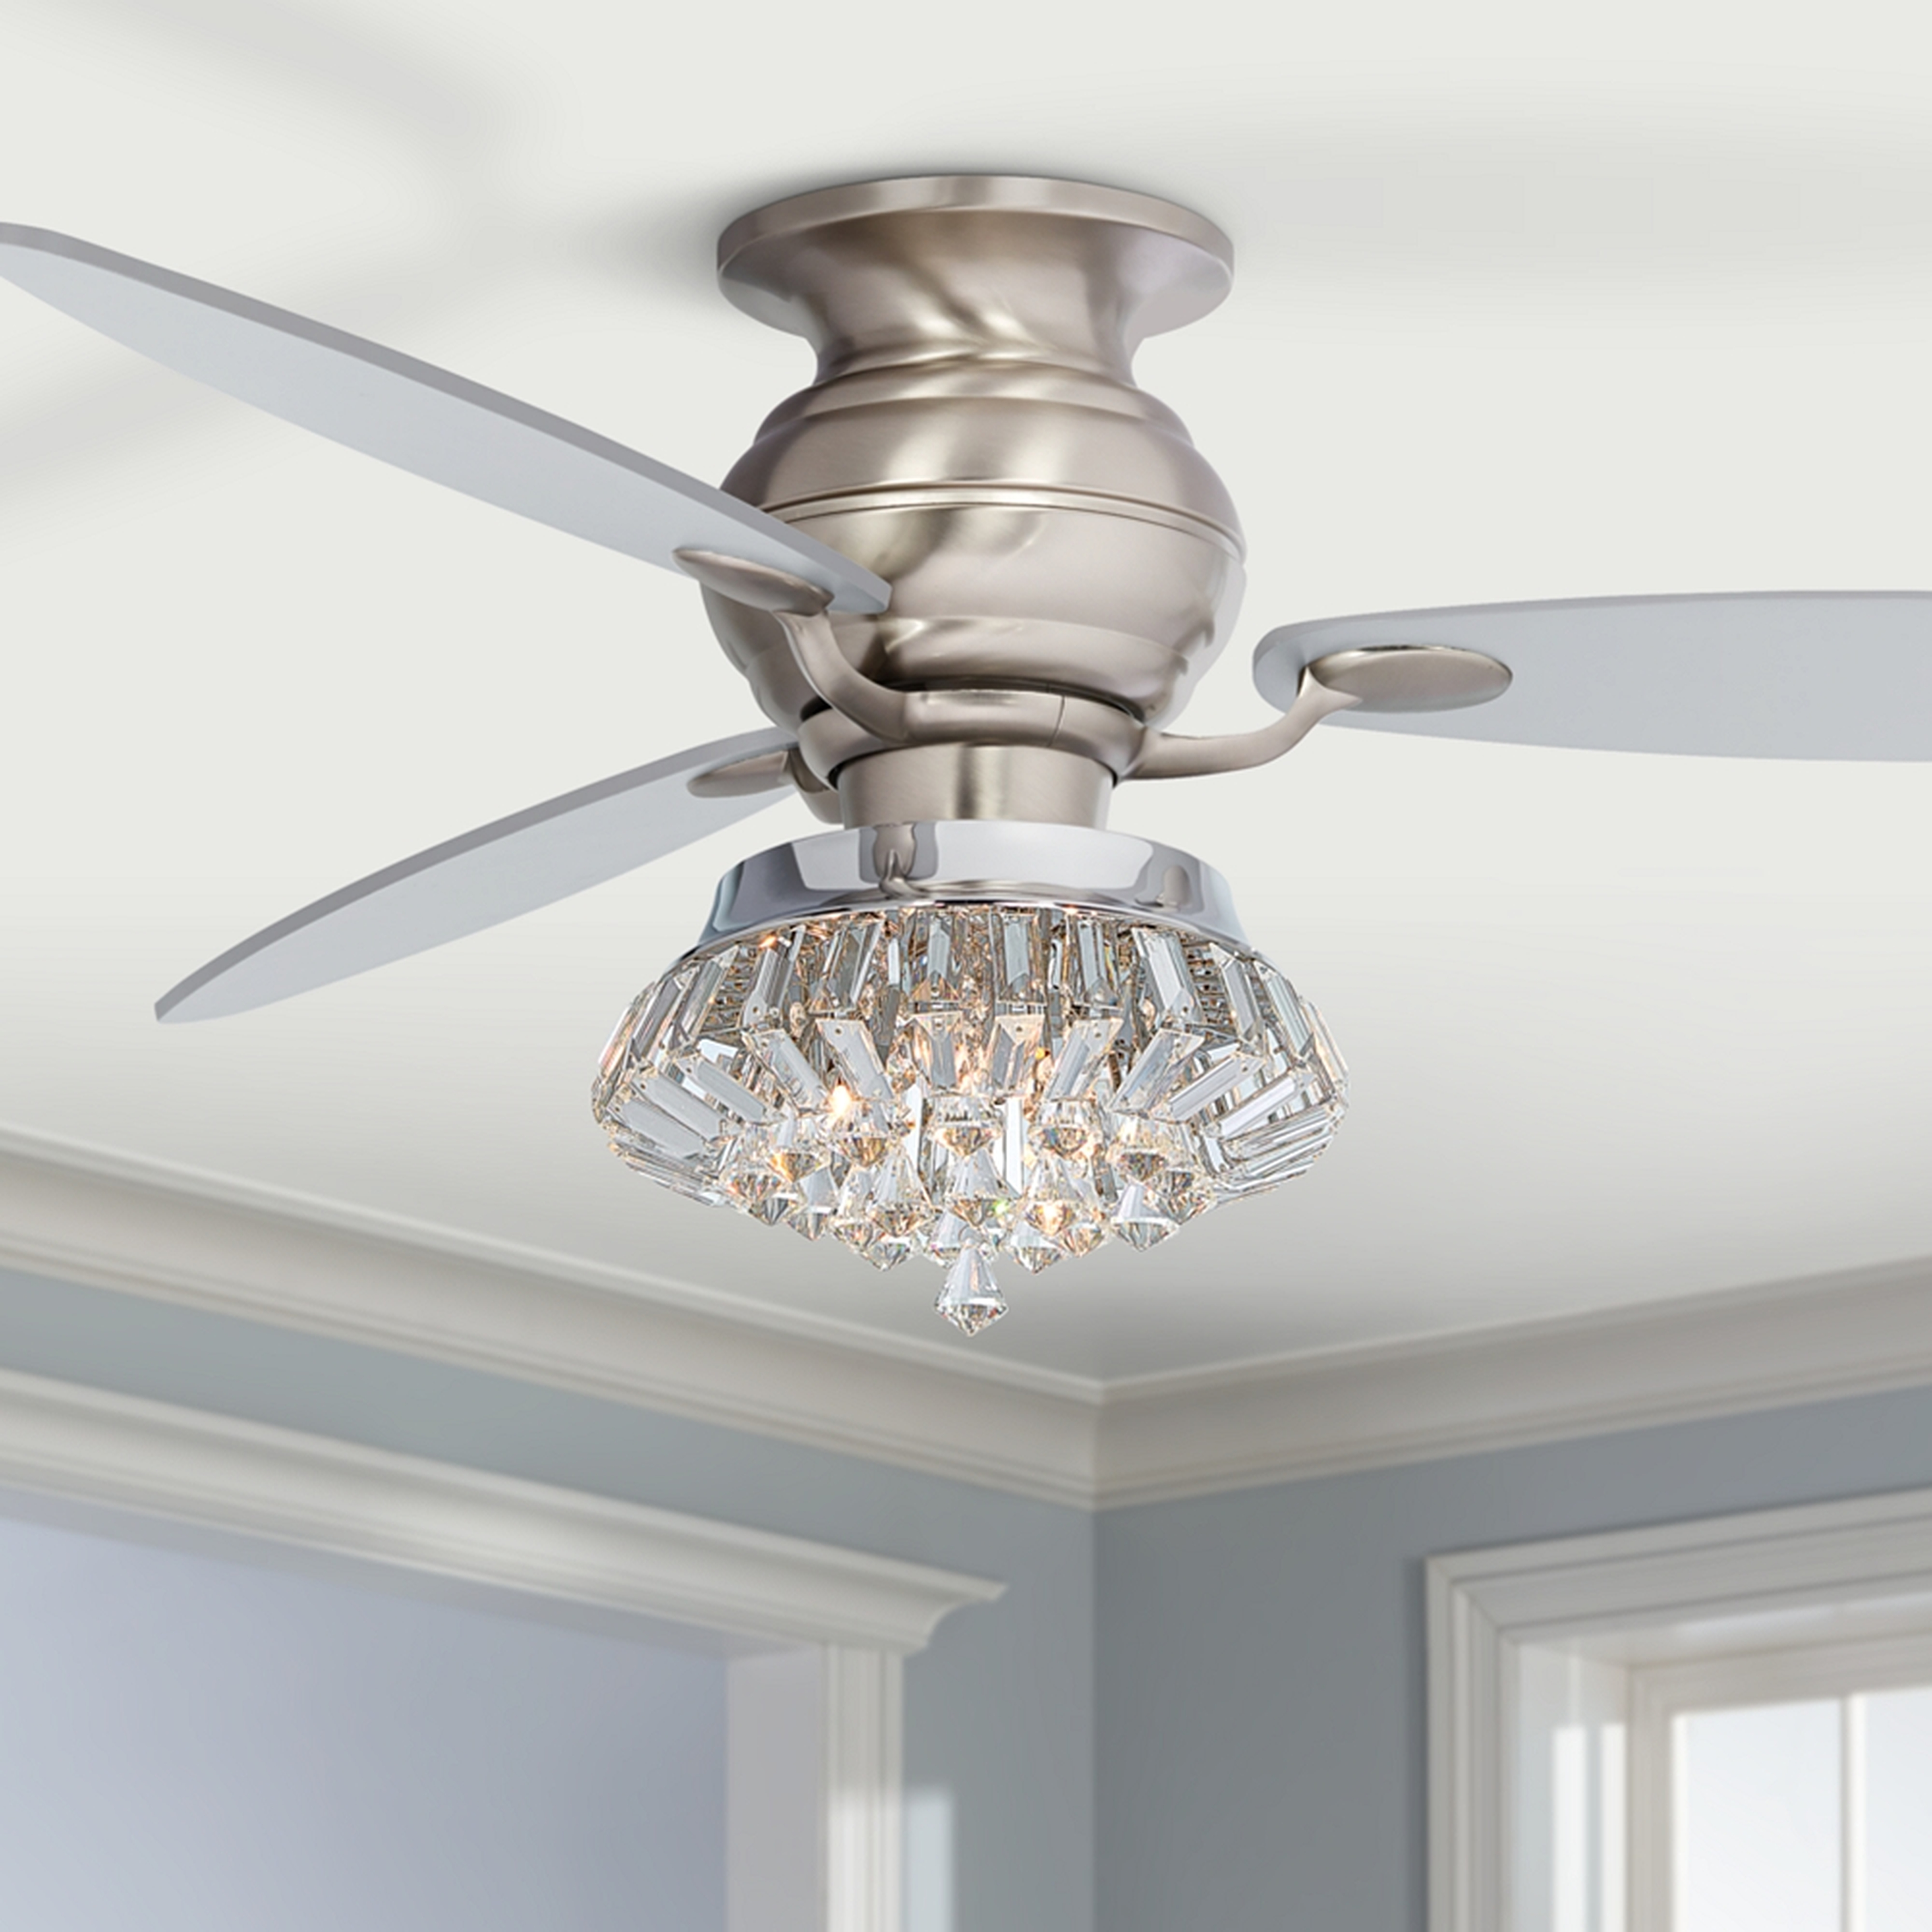 60" Spyder Deco Crystal LED Hugger Ceiling Fan - Style # 64T90 - Lamps Plus